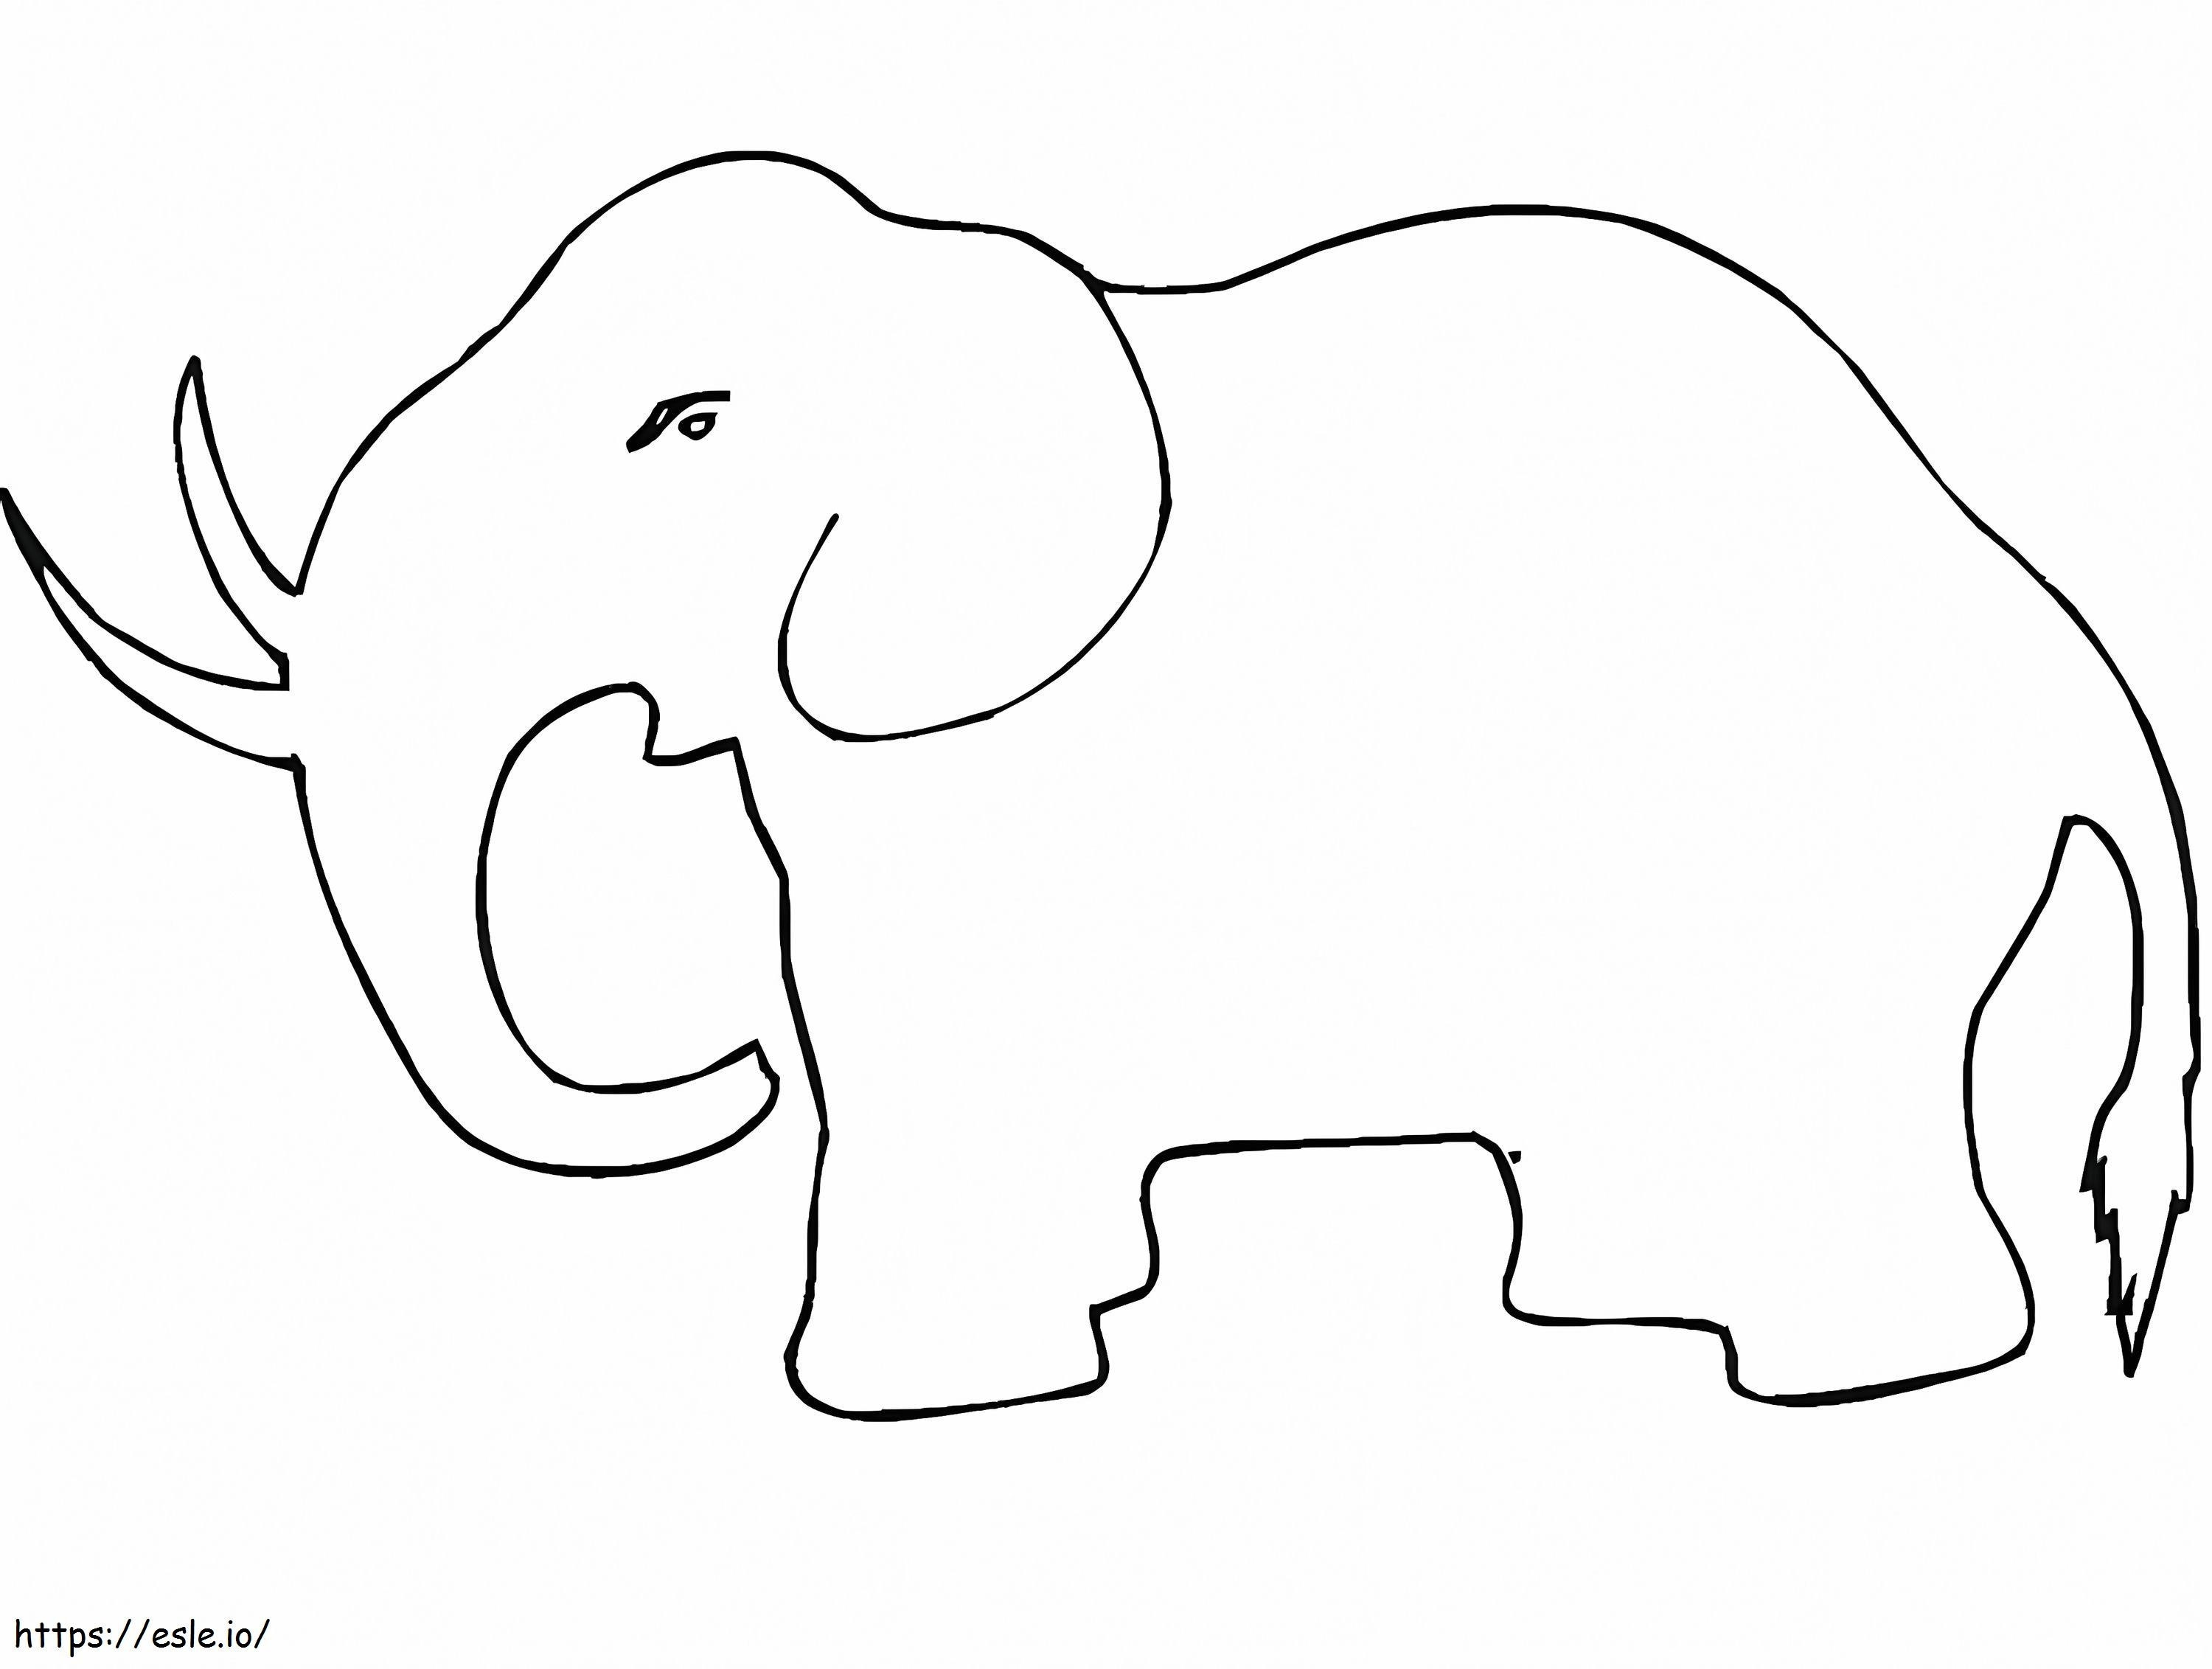 Contur mamut de colorat